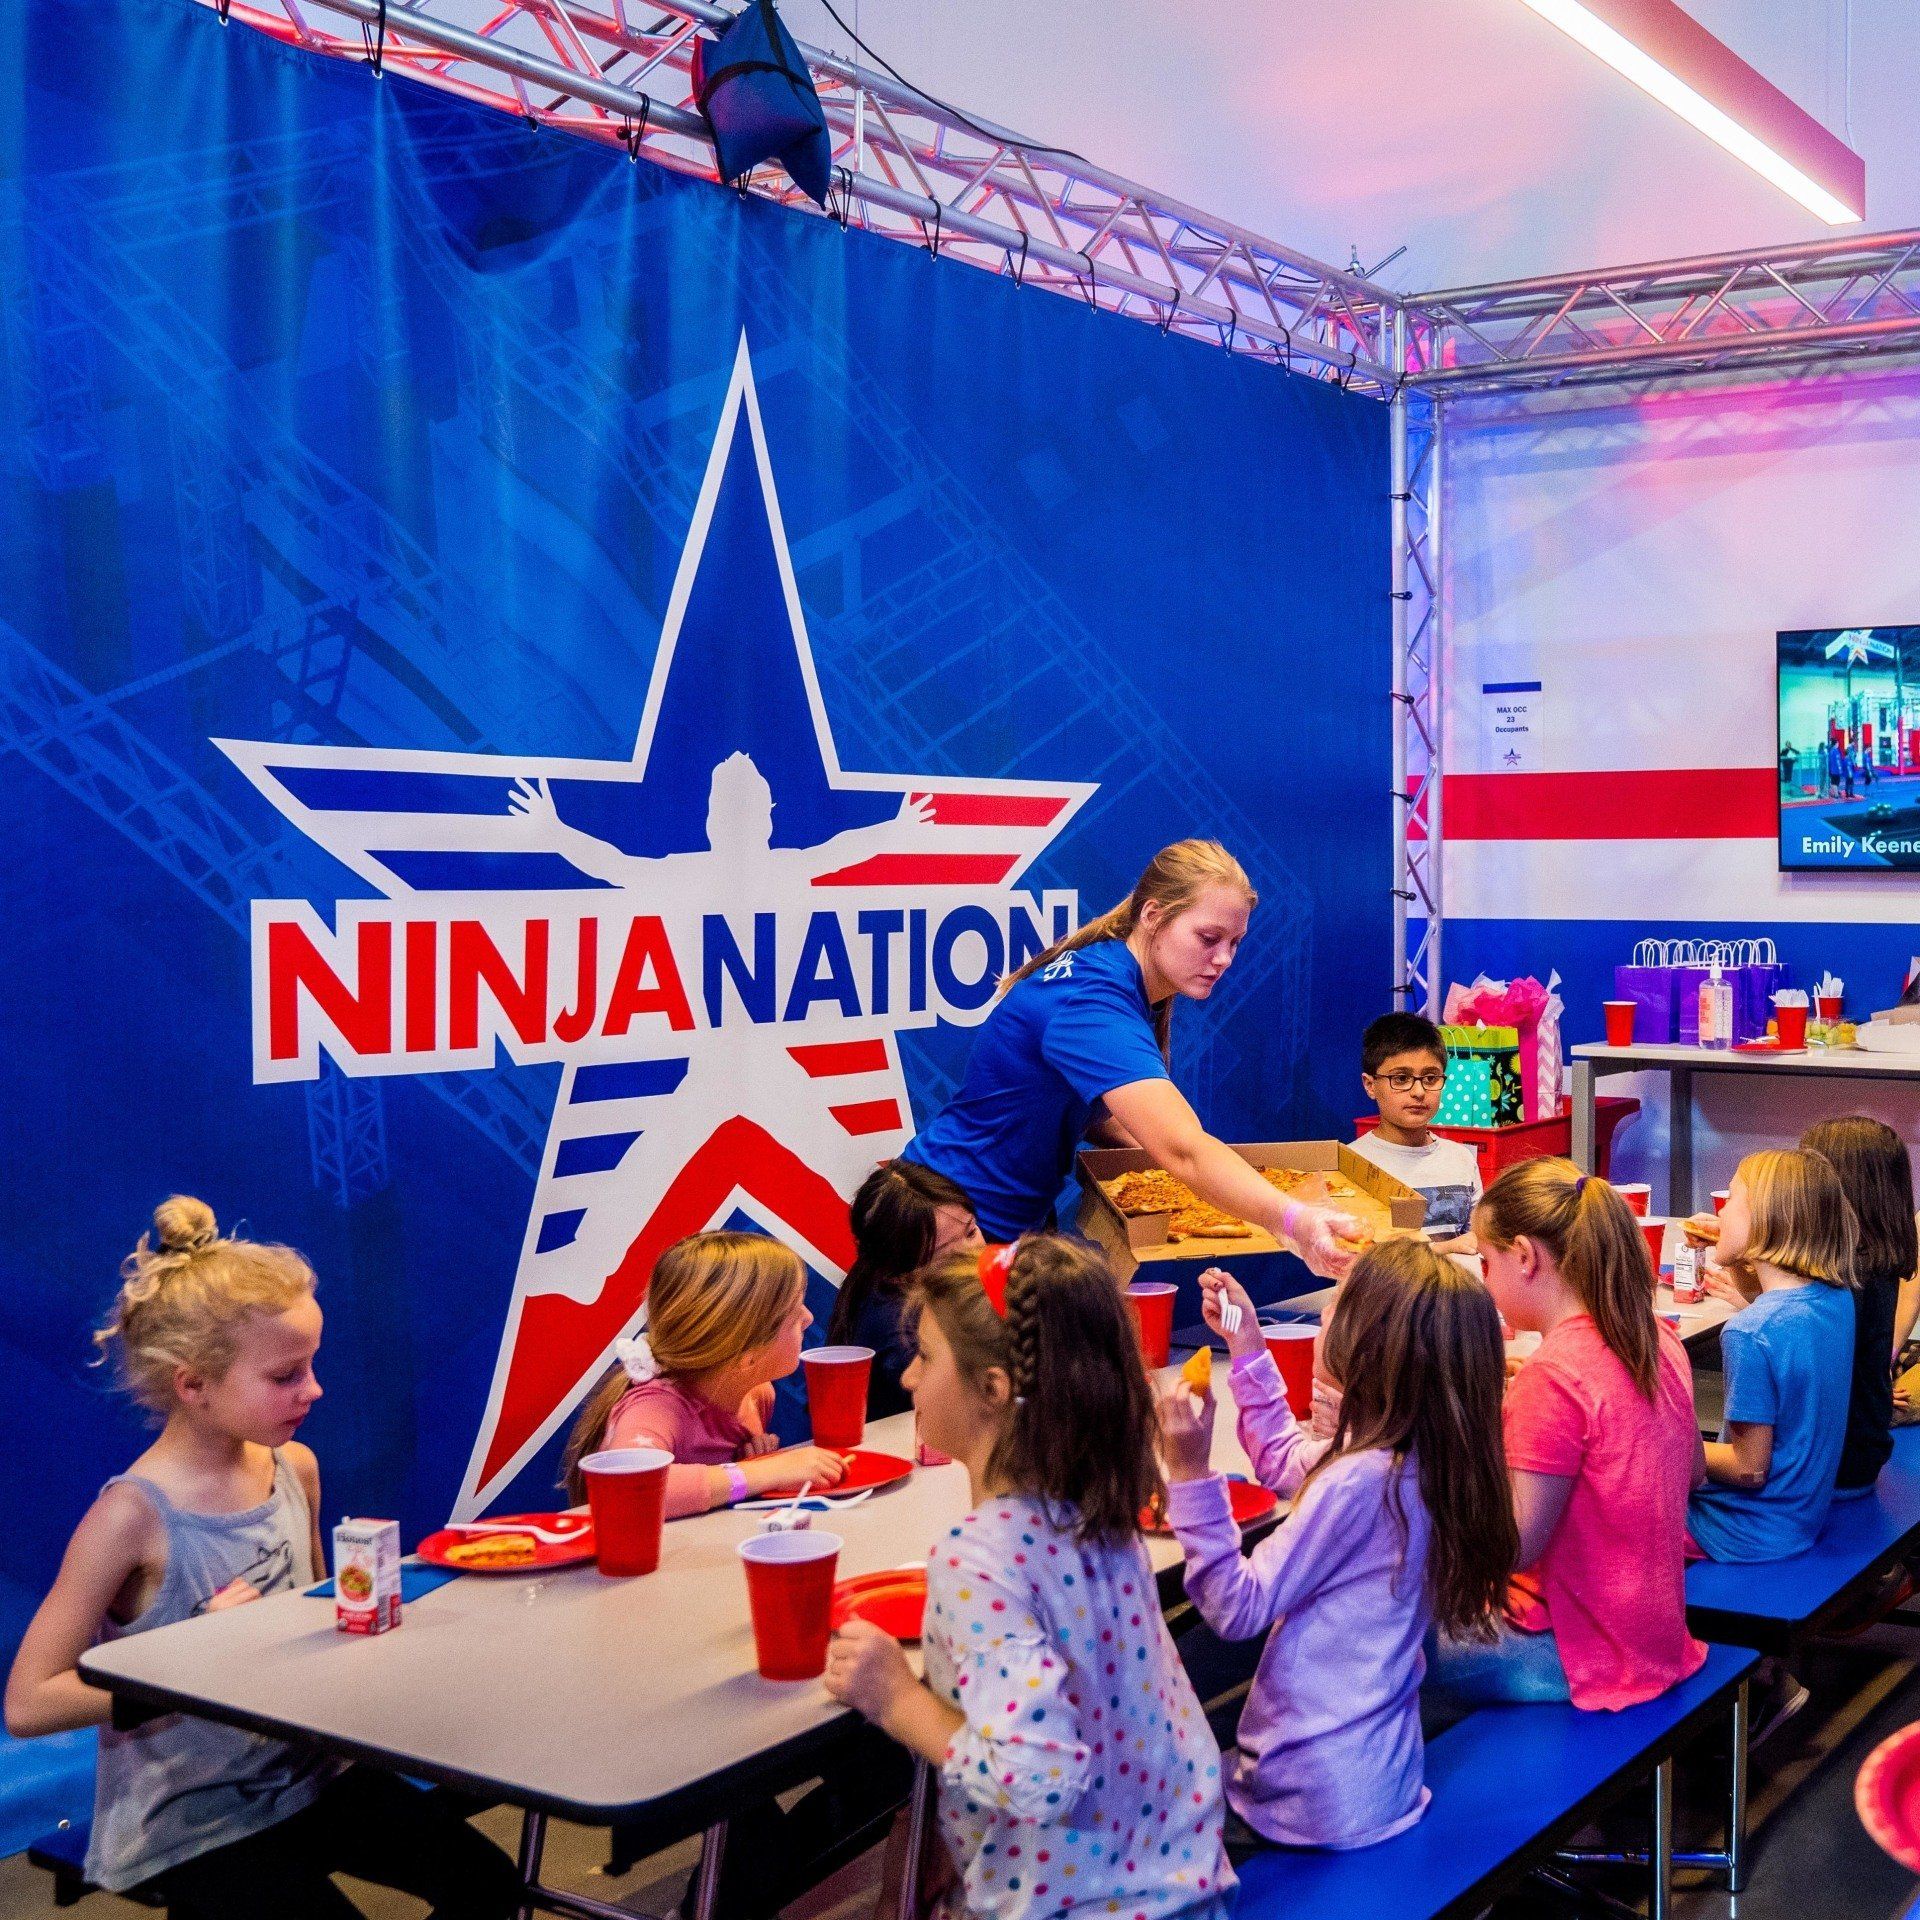 Ninja Nation Named Best Birthday Party for Kids